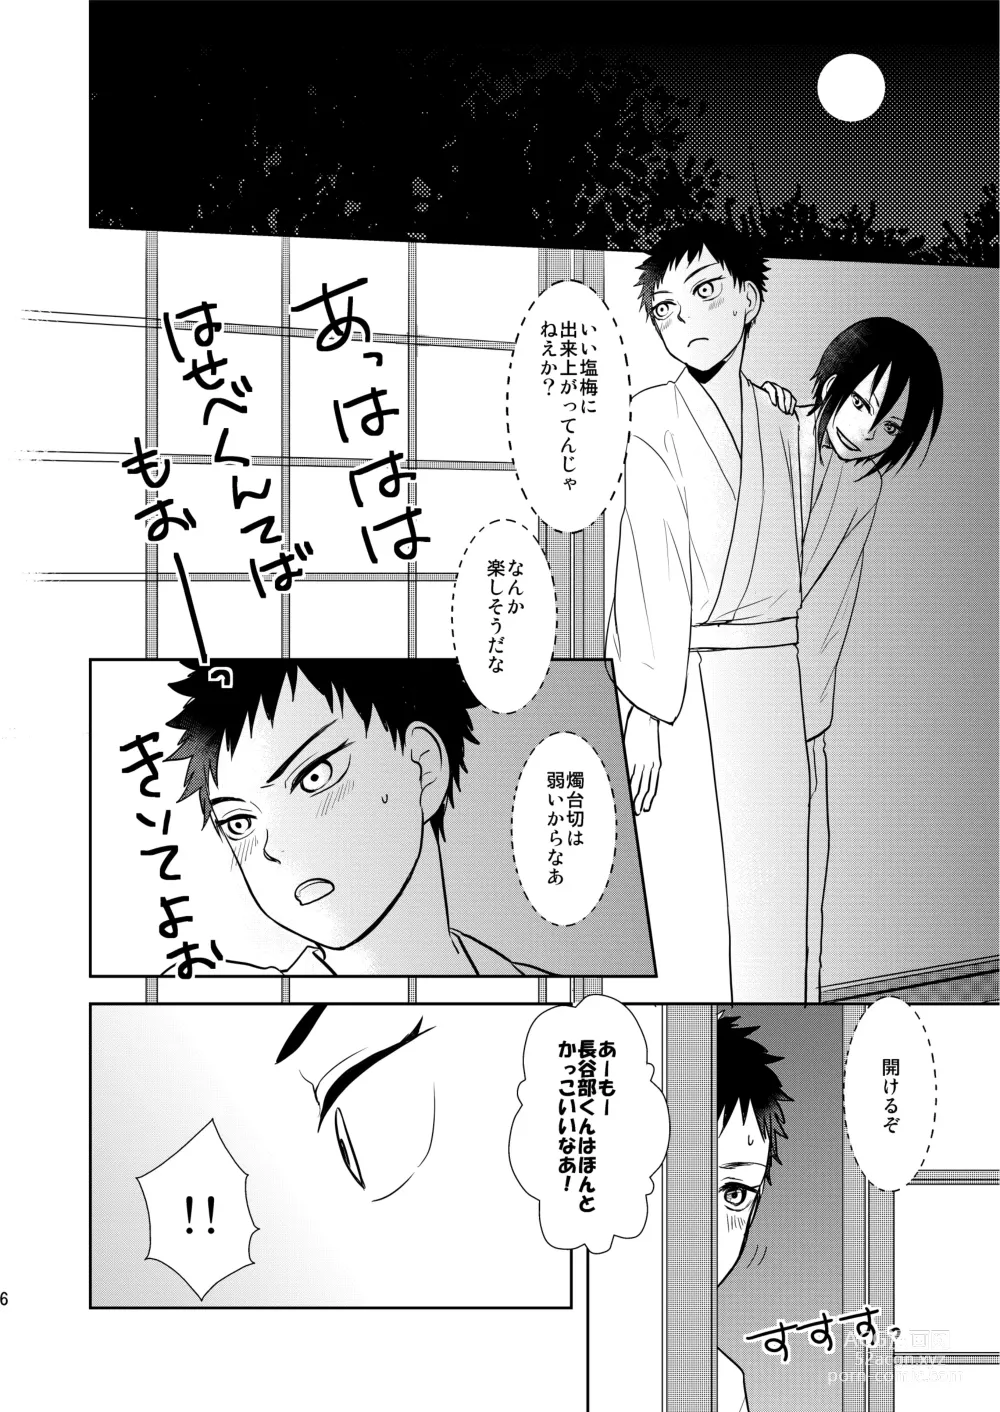 Page 5 of doujinshi Rankou Chuui